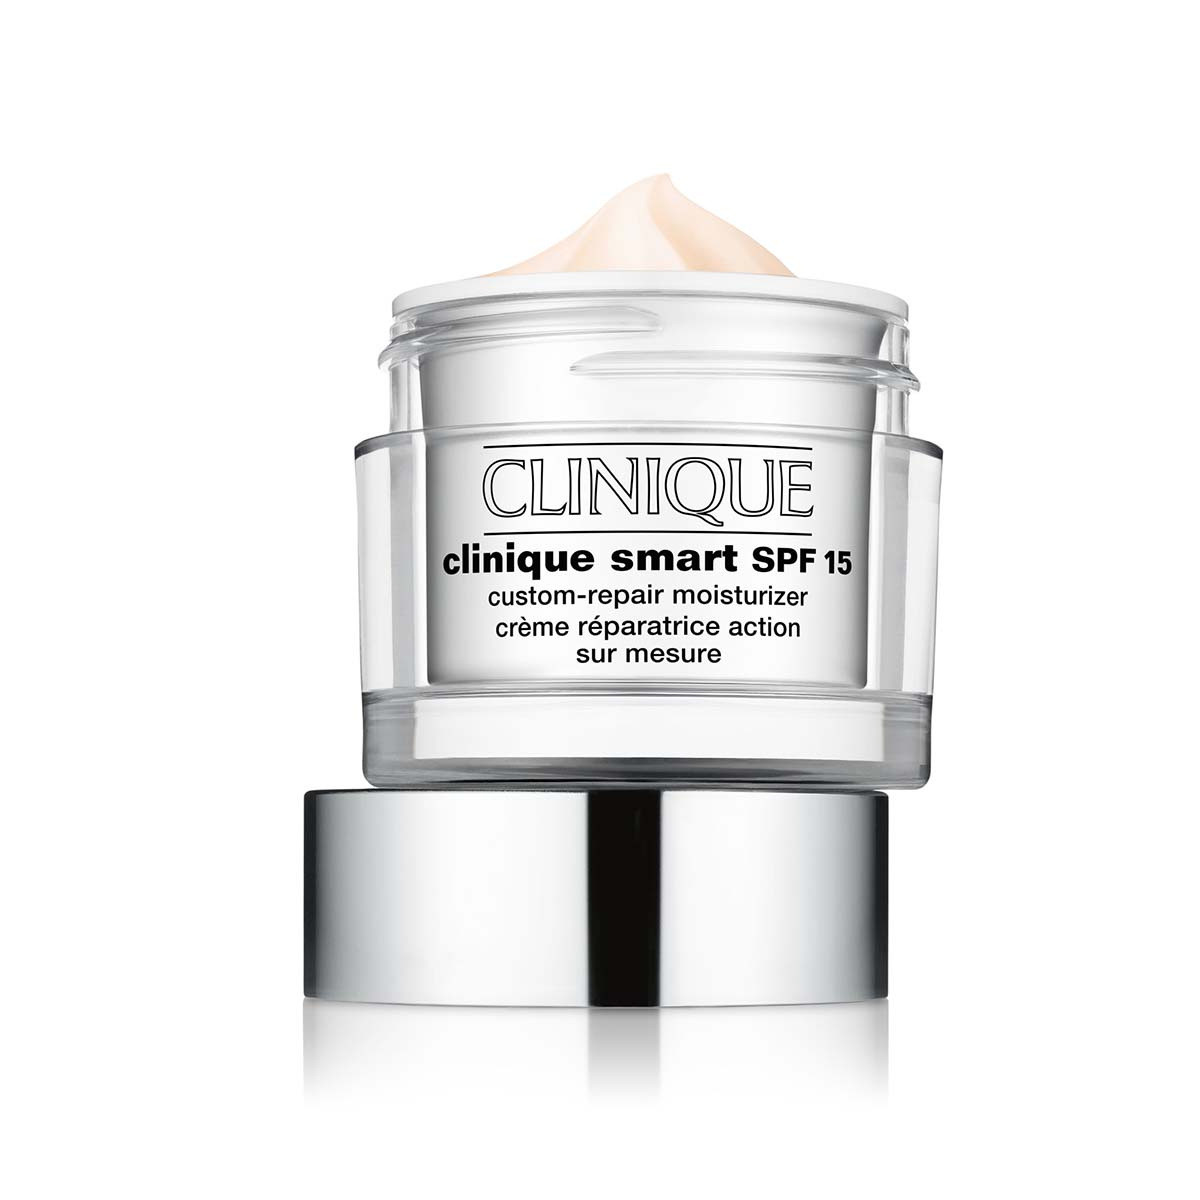 Clinique smartTM spf 15 custom moisturizer 50 ml - dry to normal skin, Grey, large image number 0